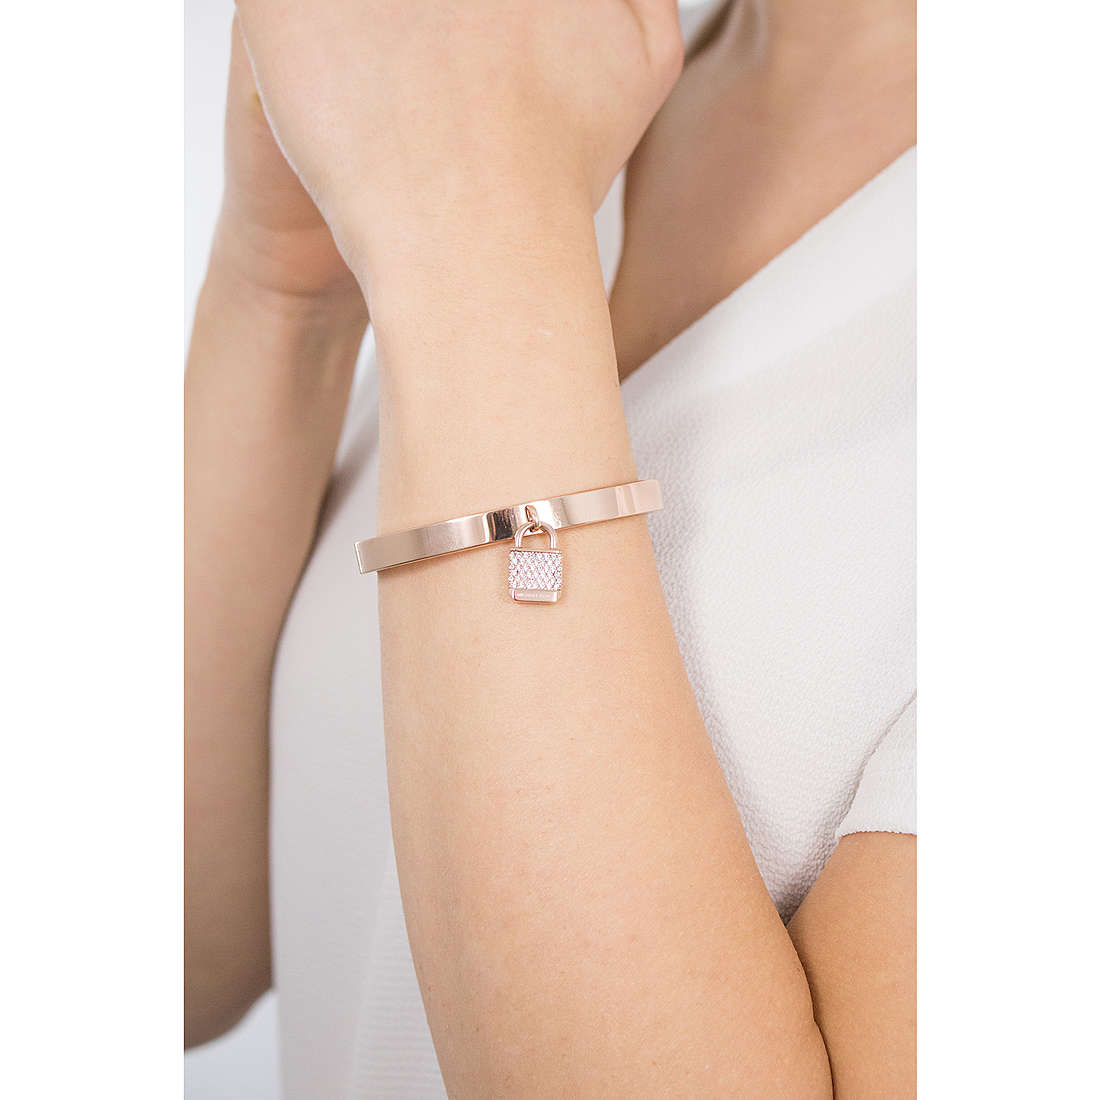 Michael Kors bracelets Iconic woman MKJ6356791 wearing